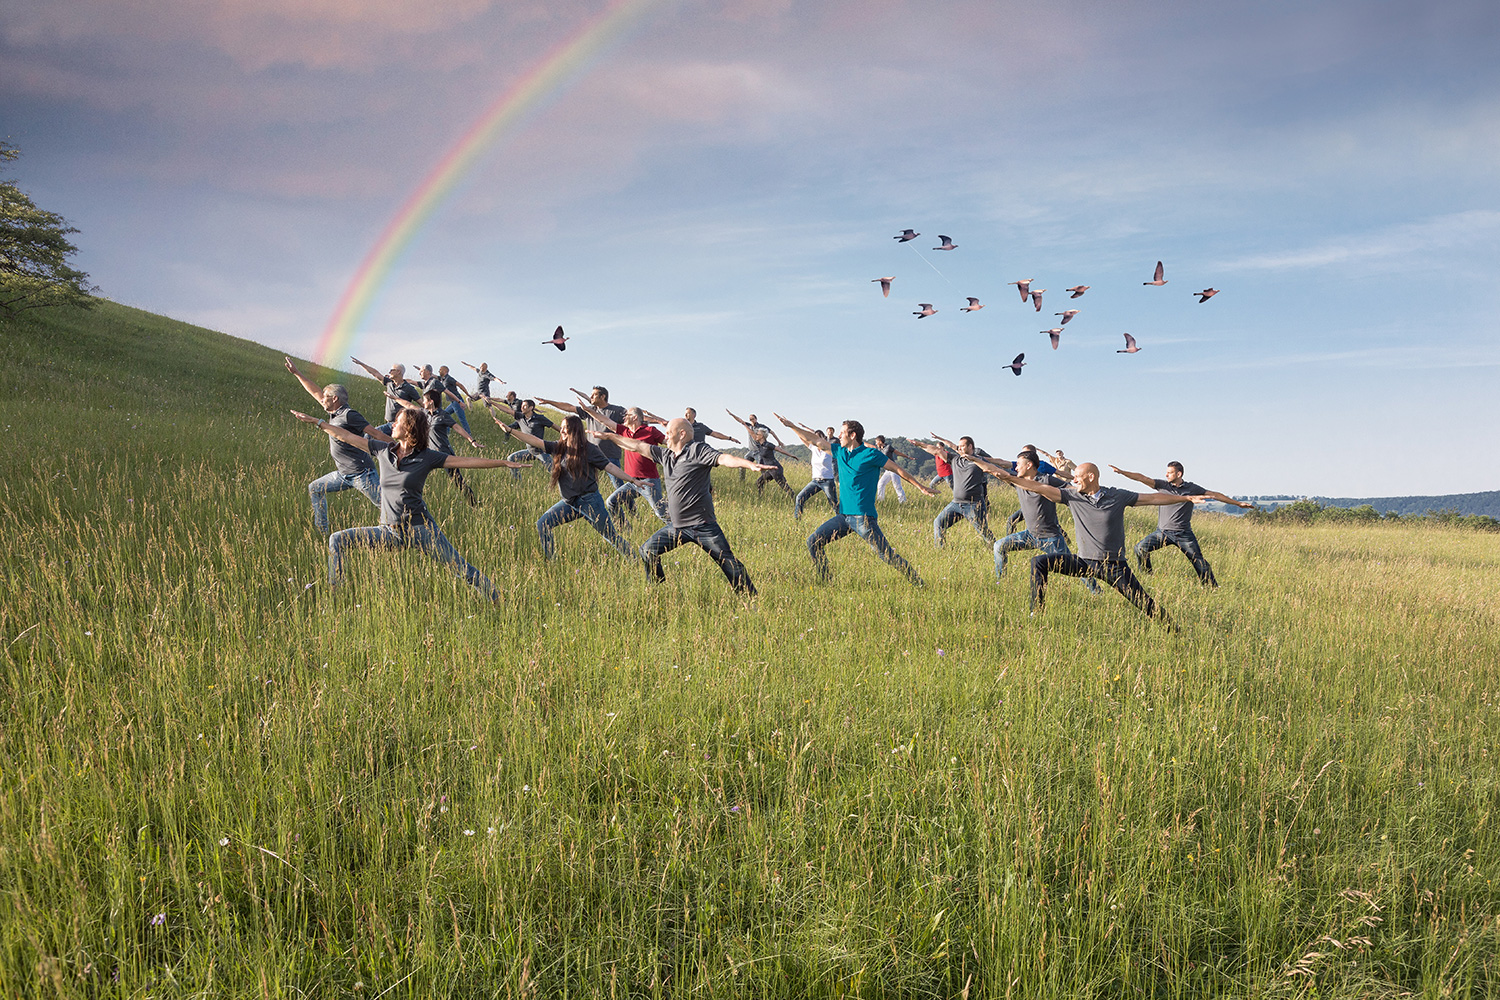 MBA Team in meditativer Pose in der Natur mit Regenbogen